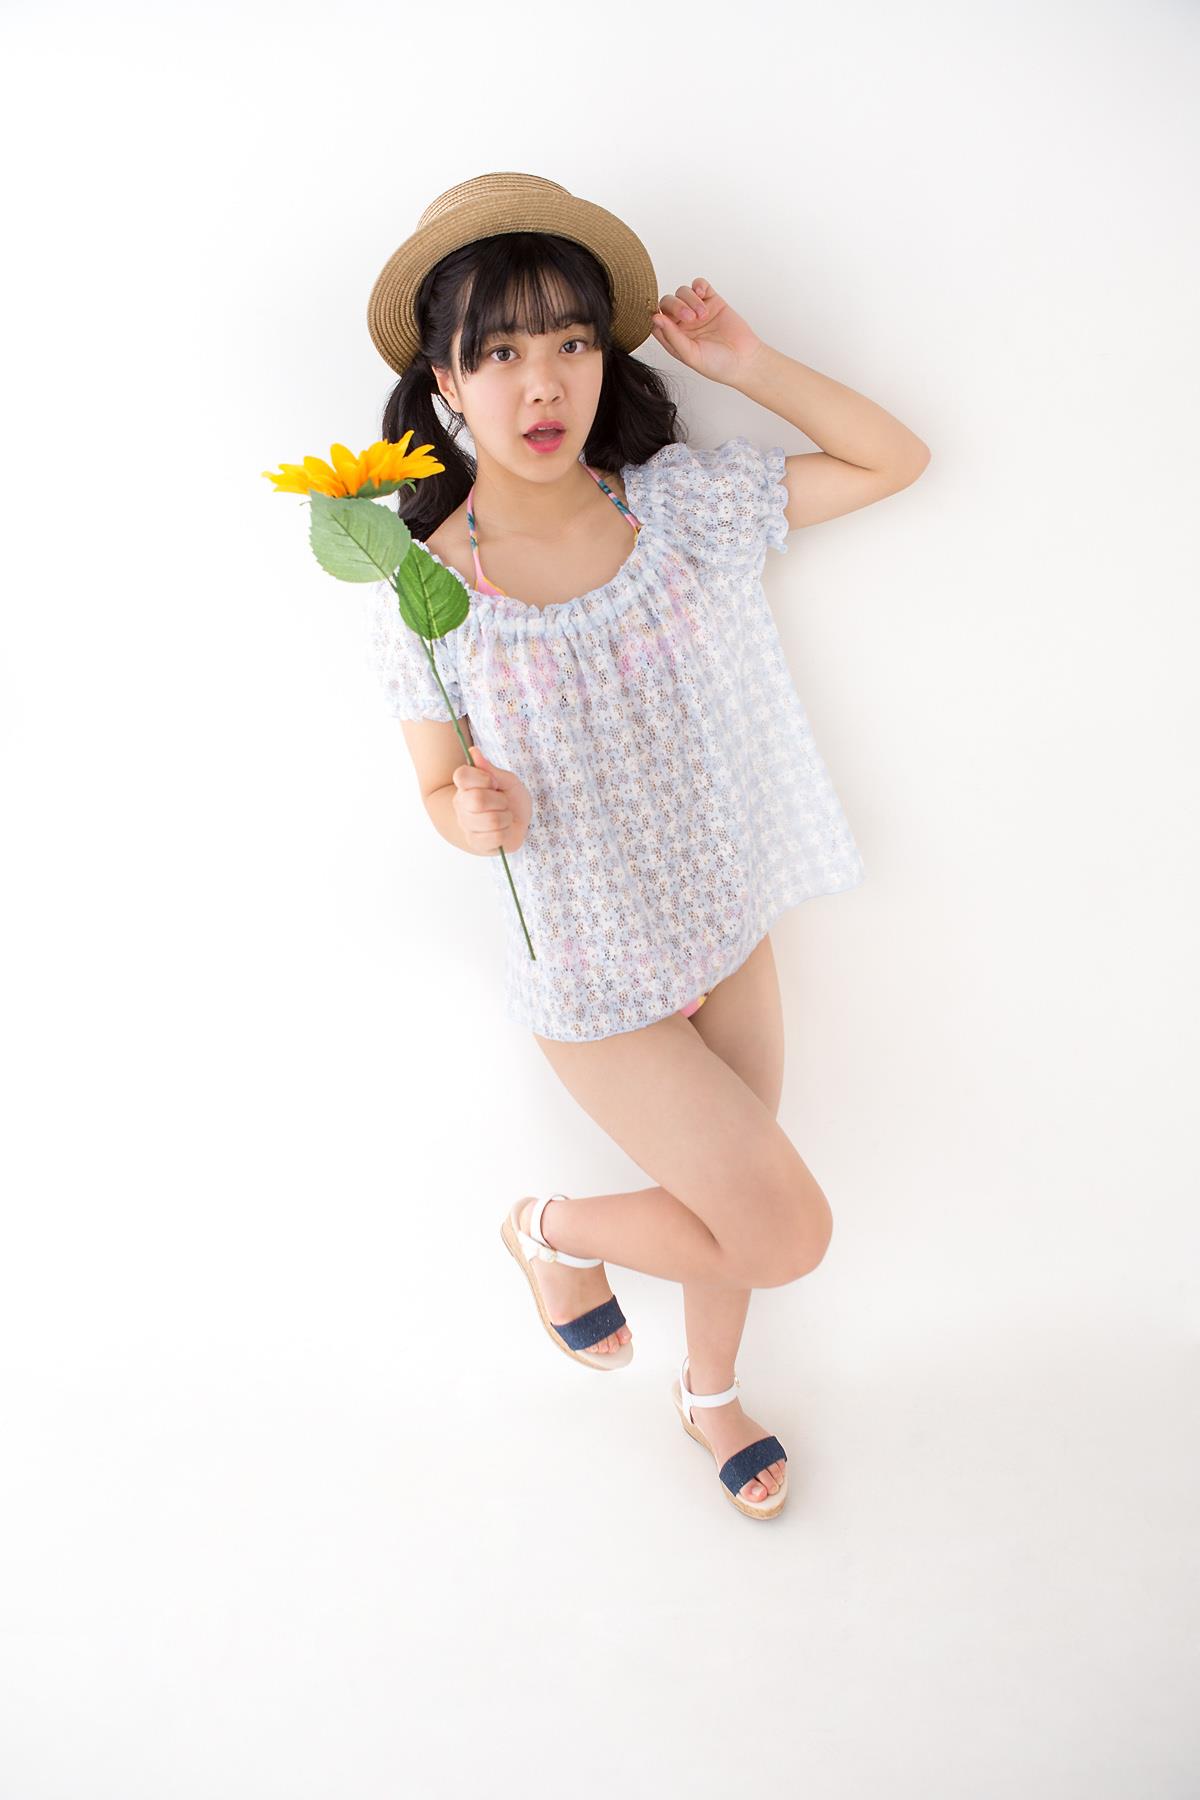 Minisuka.tv Saria Natsume 夏目咲莉愛 Premium Gallery 05 - 25.jpg